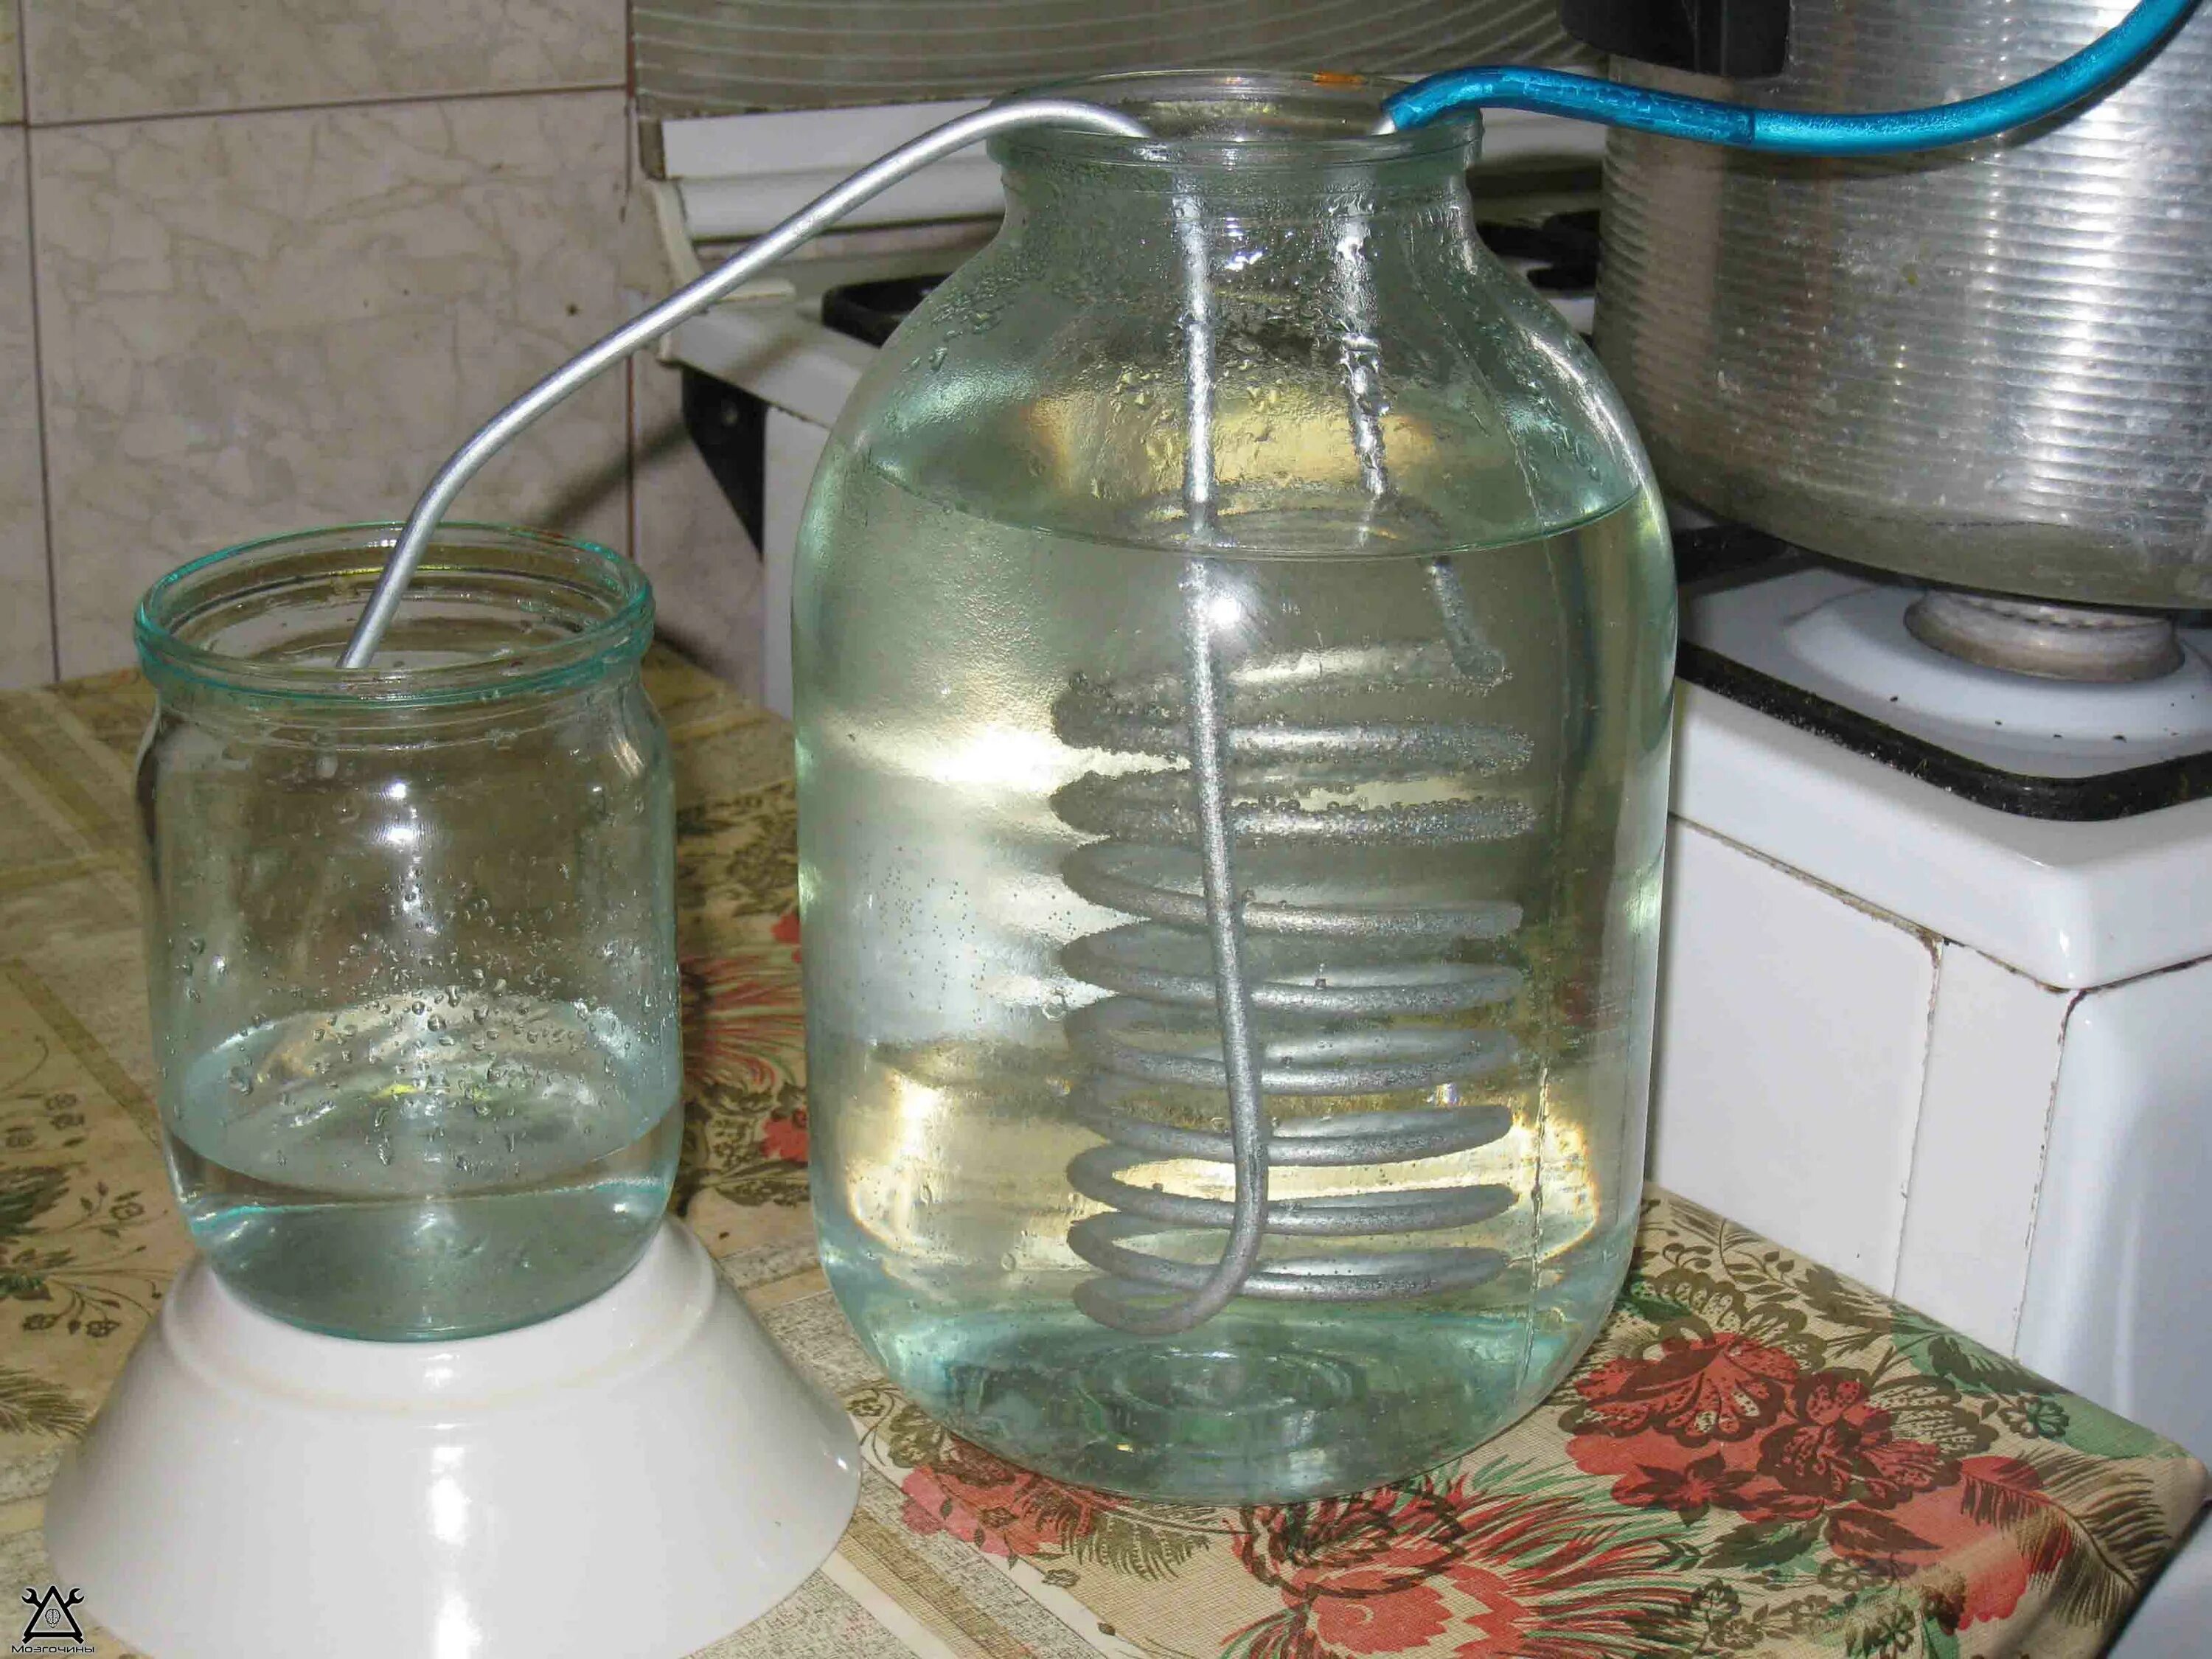 Дистиллированная вода опыты. Дистиллированная вода в домашних условиях. Дистиллятор для дистиллированной воды. Дистилляция в домашних условиях. Перегонка дистиллированной воды.